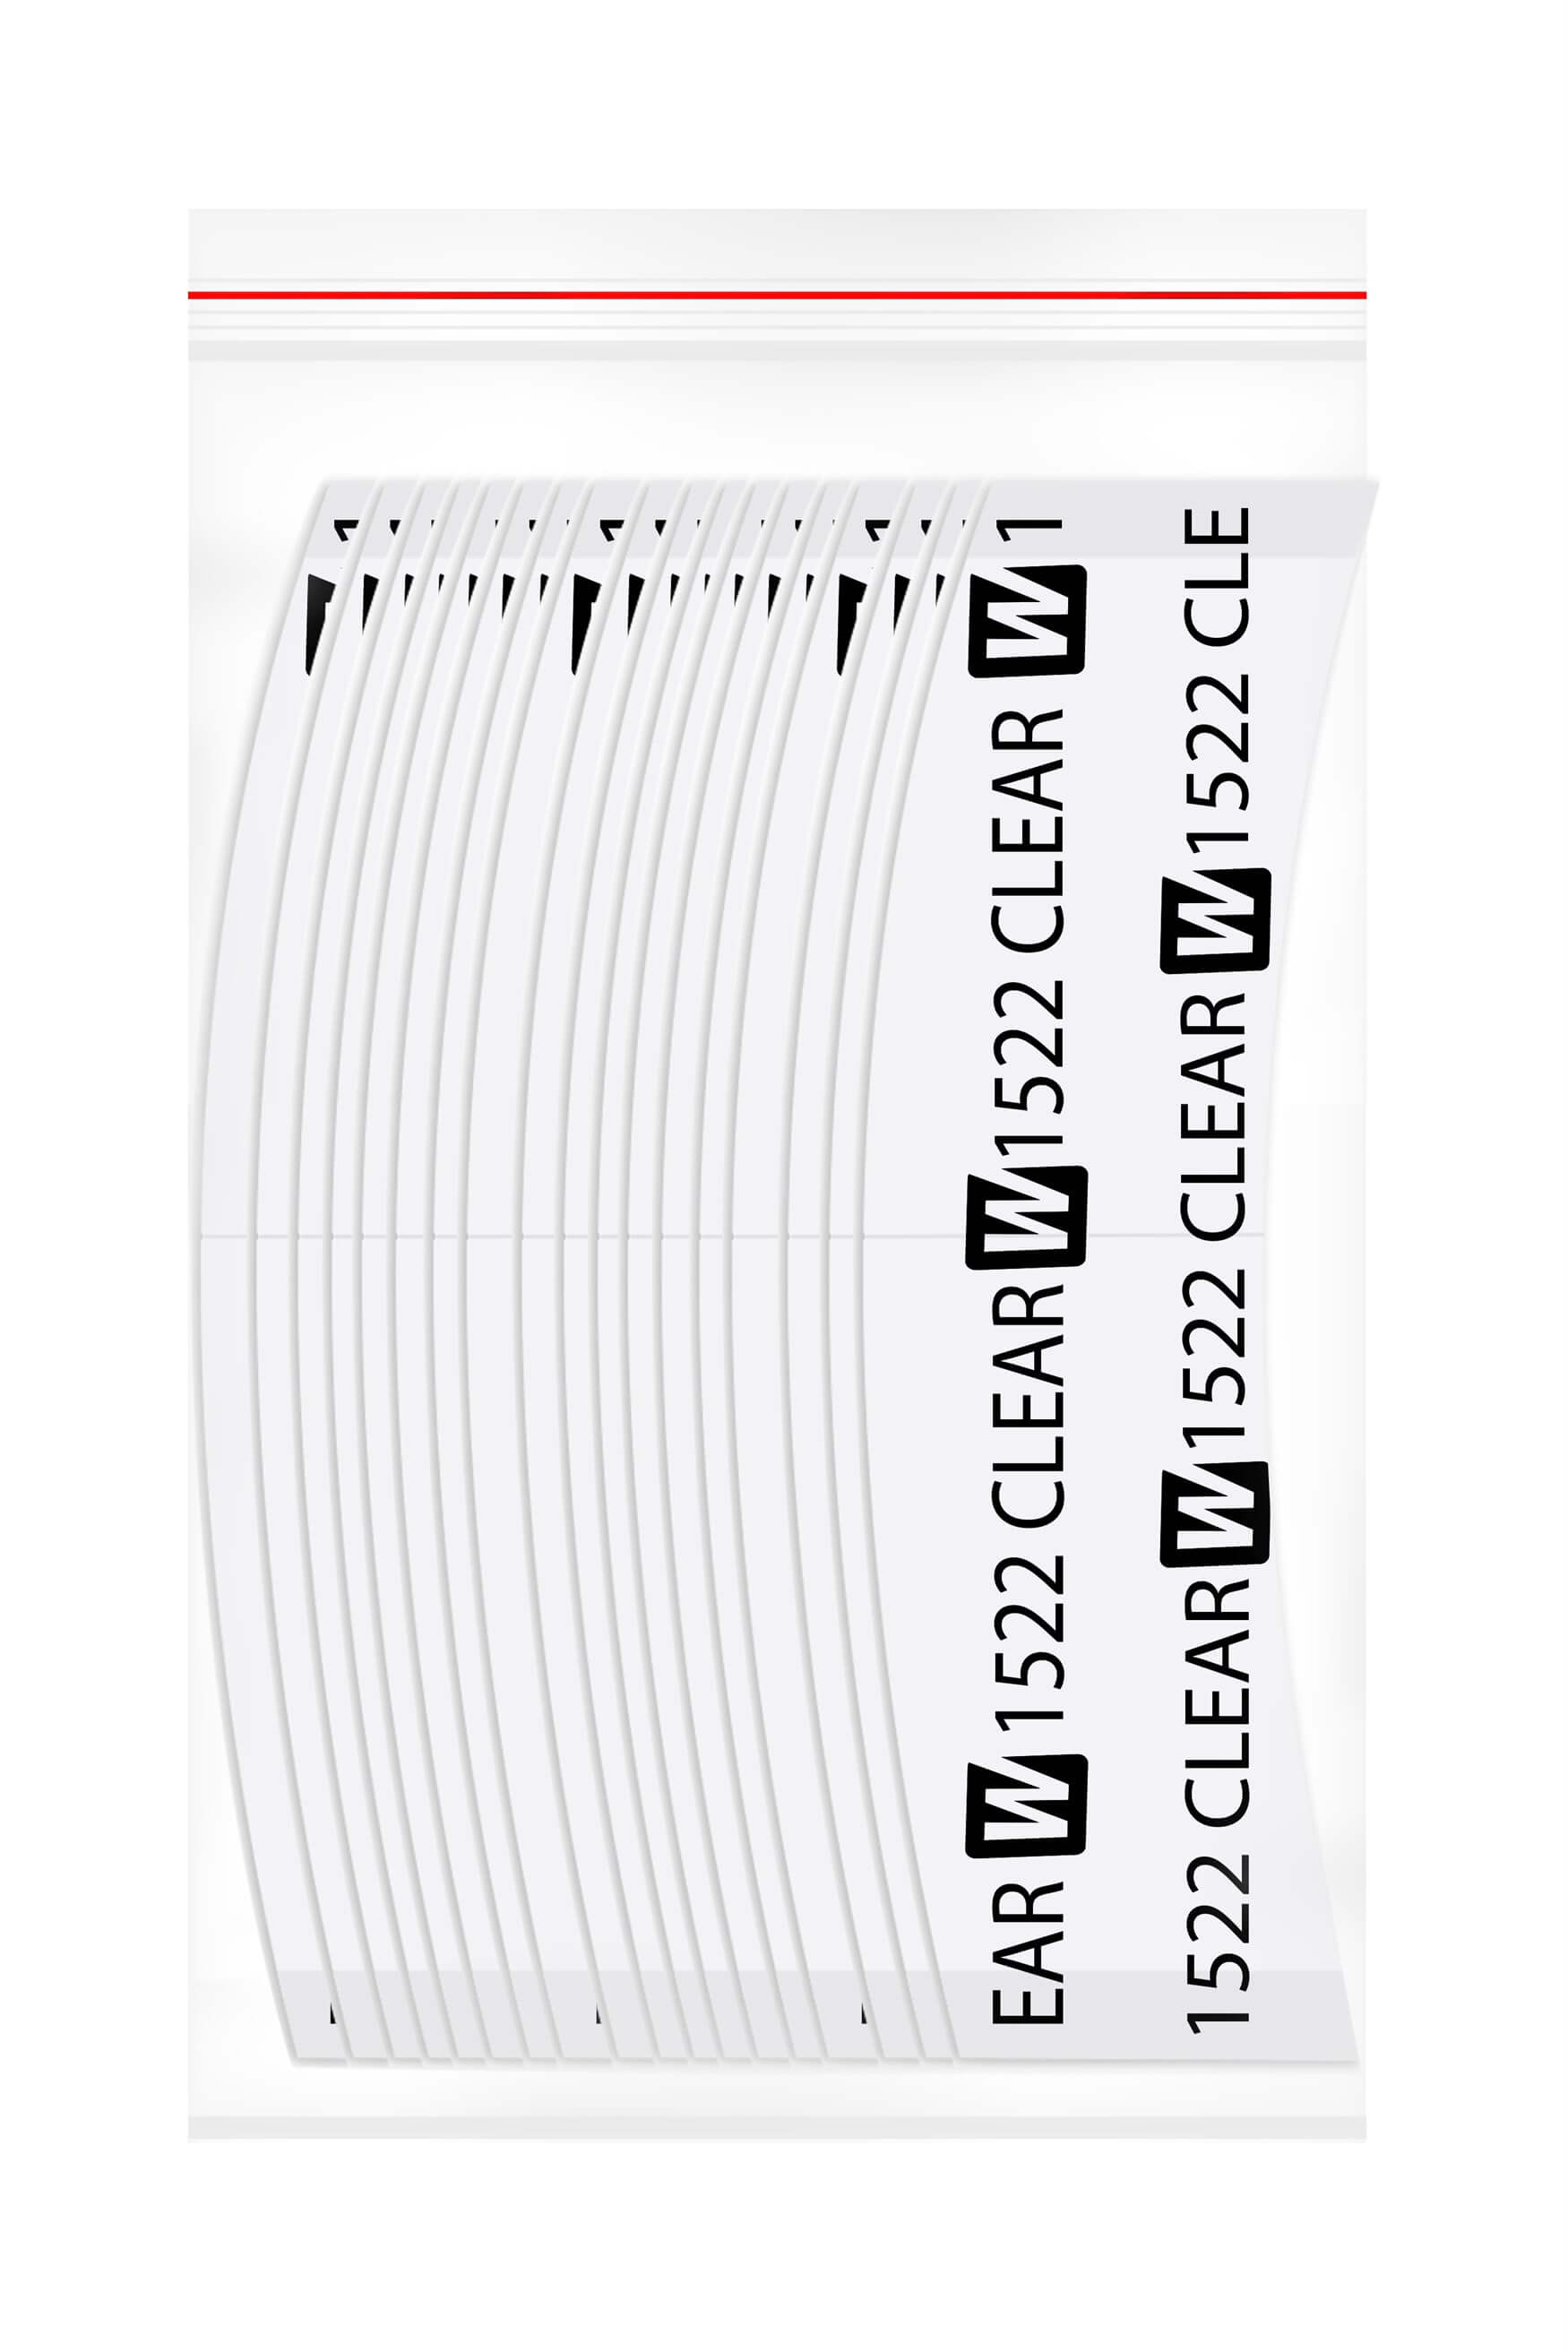 Walker Tape 1522 Clear Mini's™ Protez Saç Bandı Oval 3/4″ x 3″ (1,90 x 7,62 cm) 72 Adet